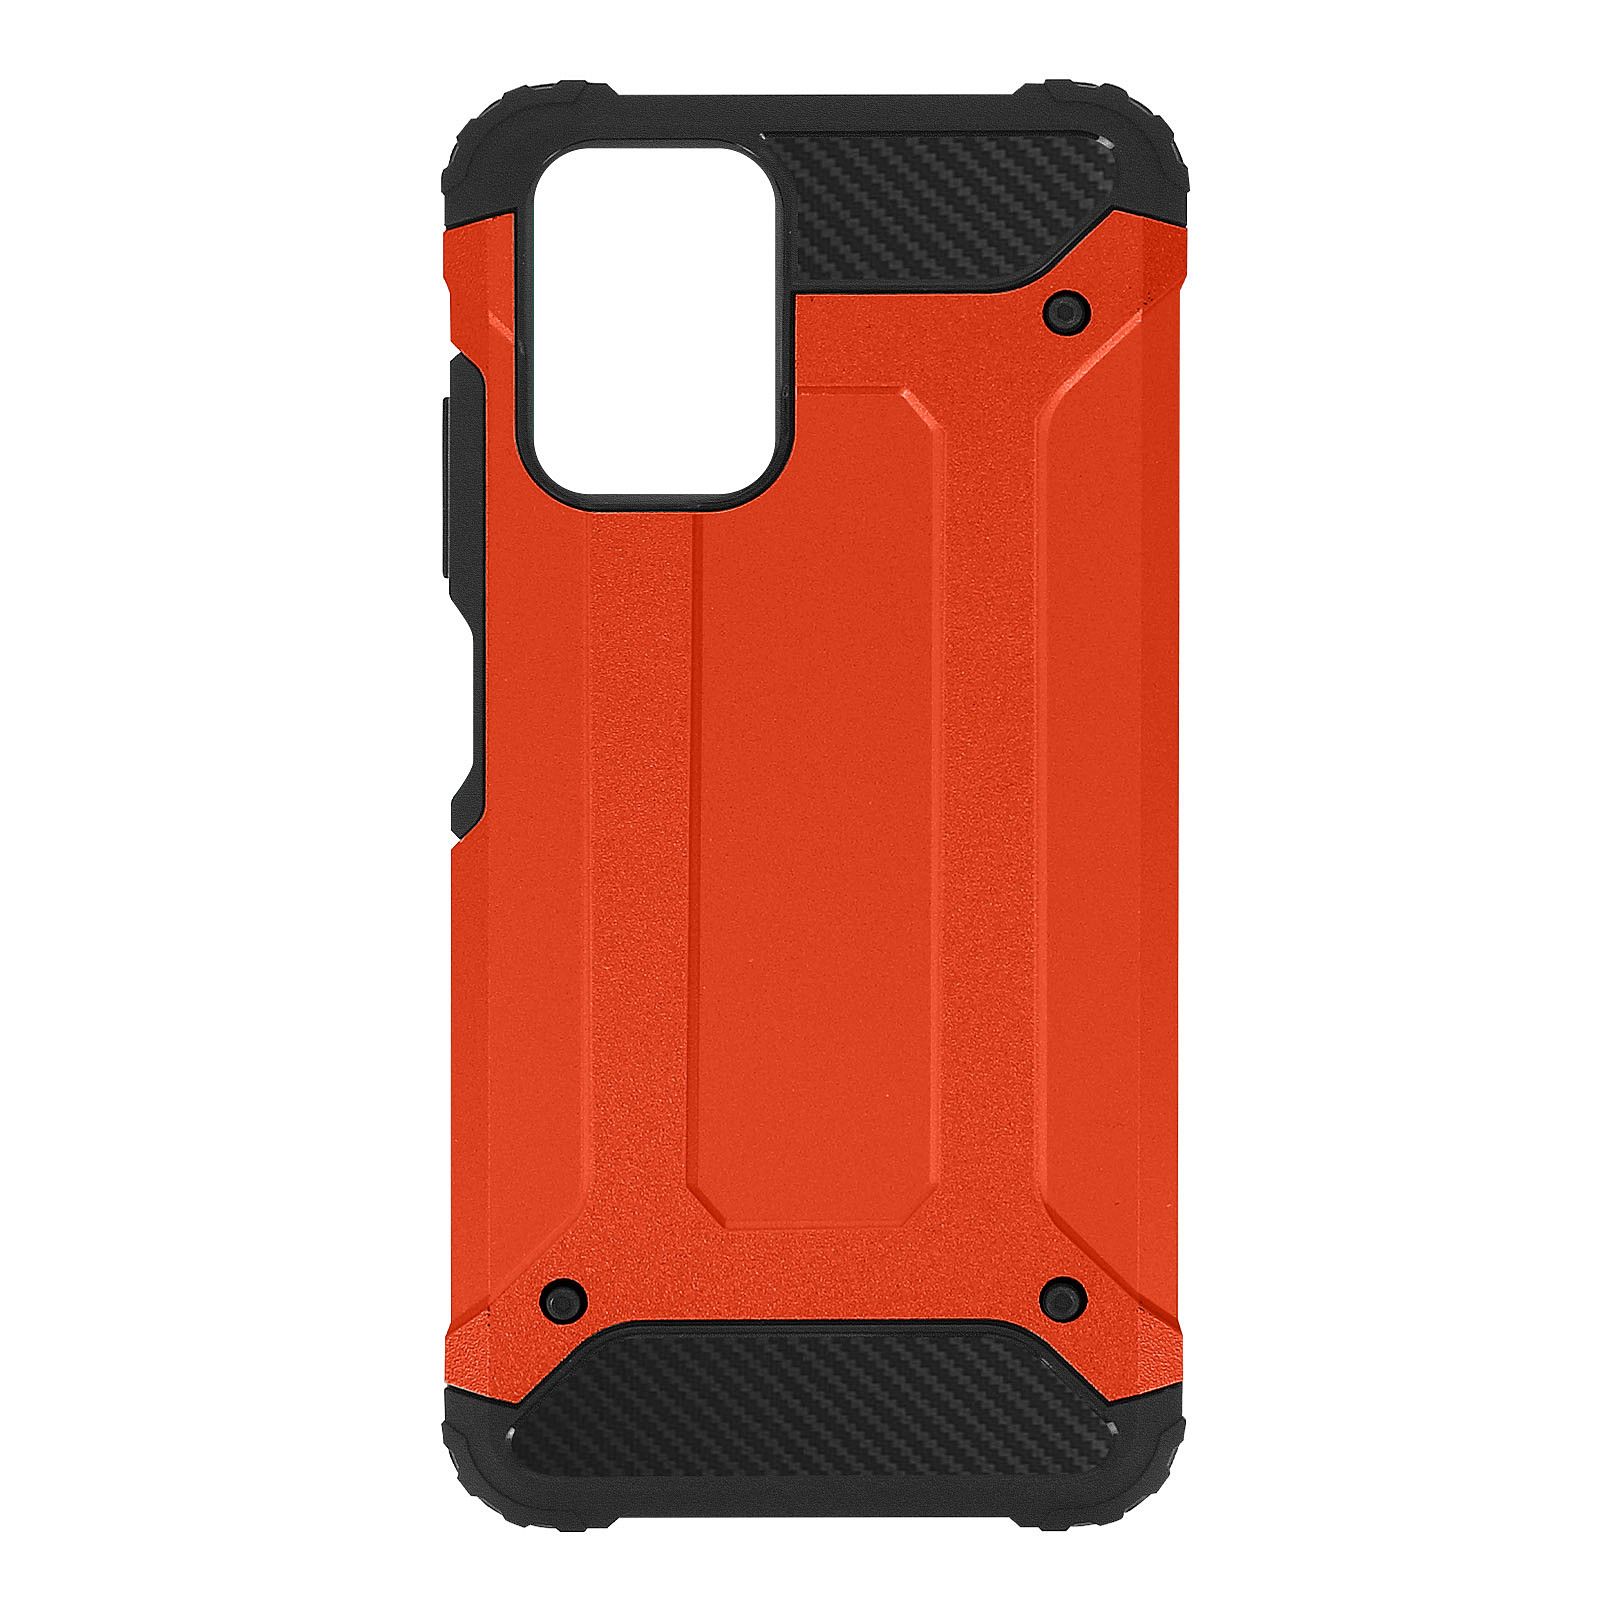 Avizar Coque pour Xiaomi Redmi Note 10s et Note 10 Design Relief Bi-matière Anti-chute Defender II Rouge orange - Coque telephone Avizar